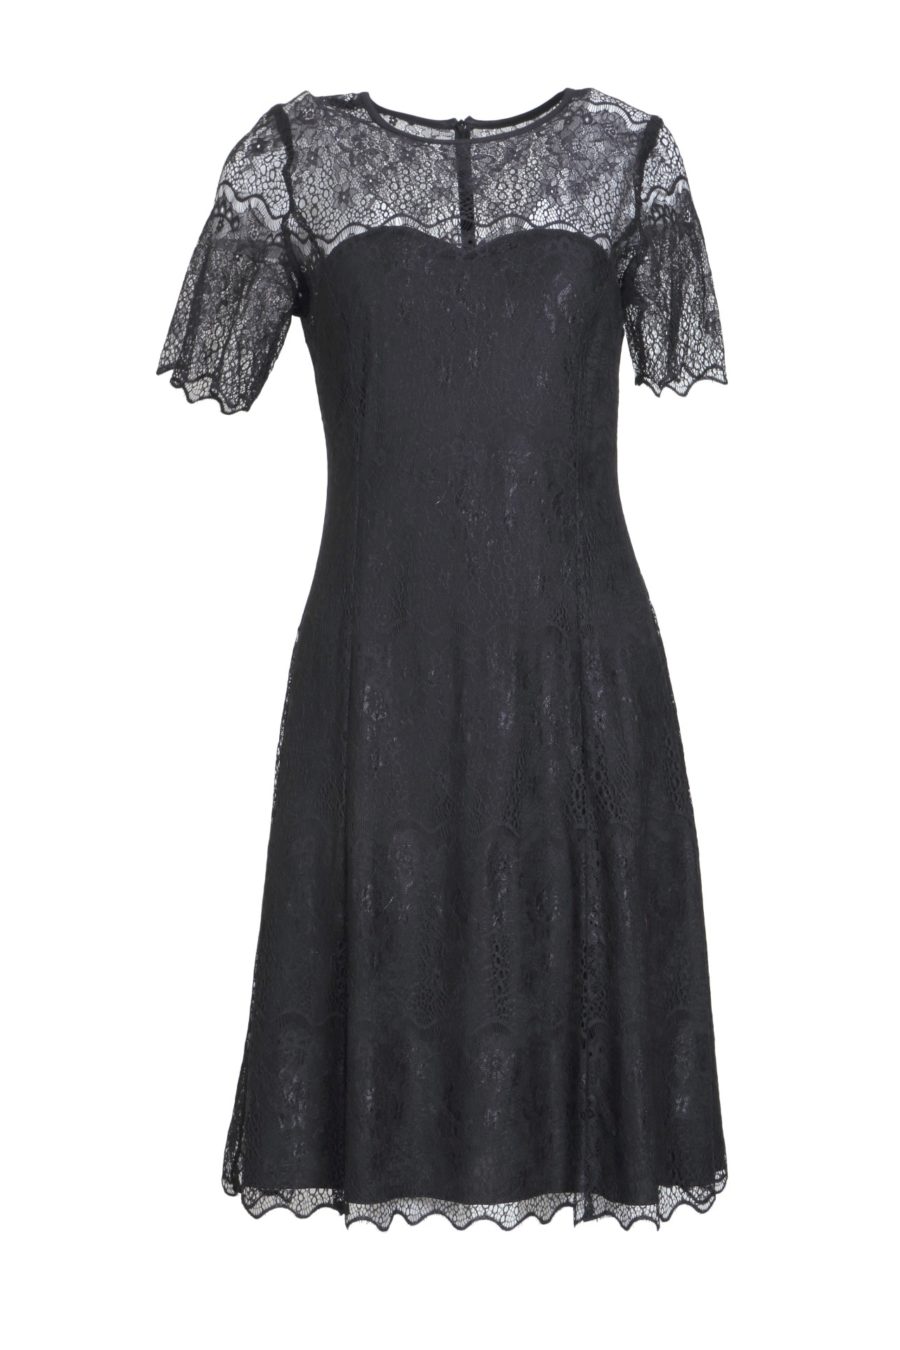 Dress, elastic lace, black